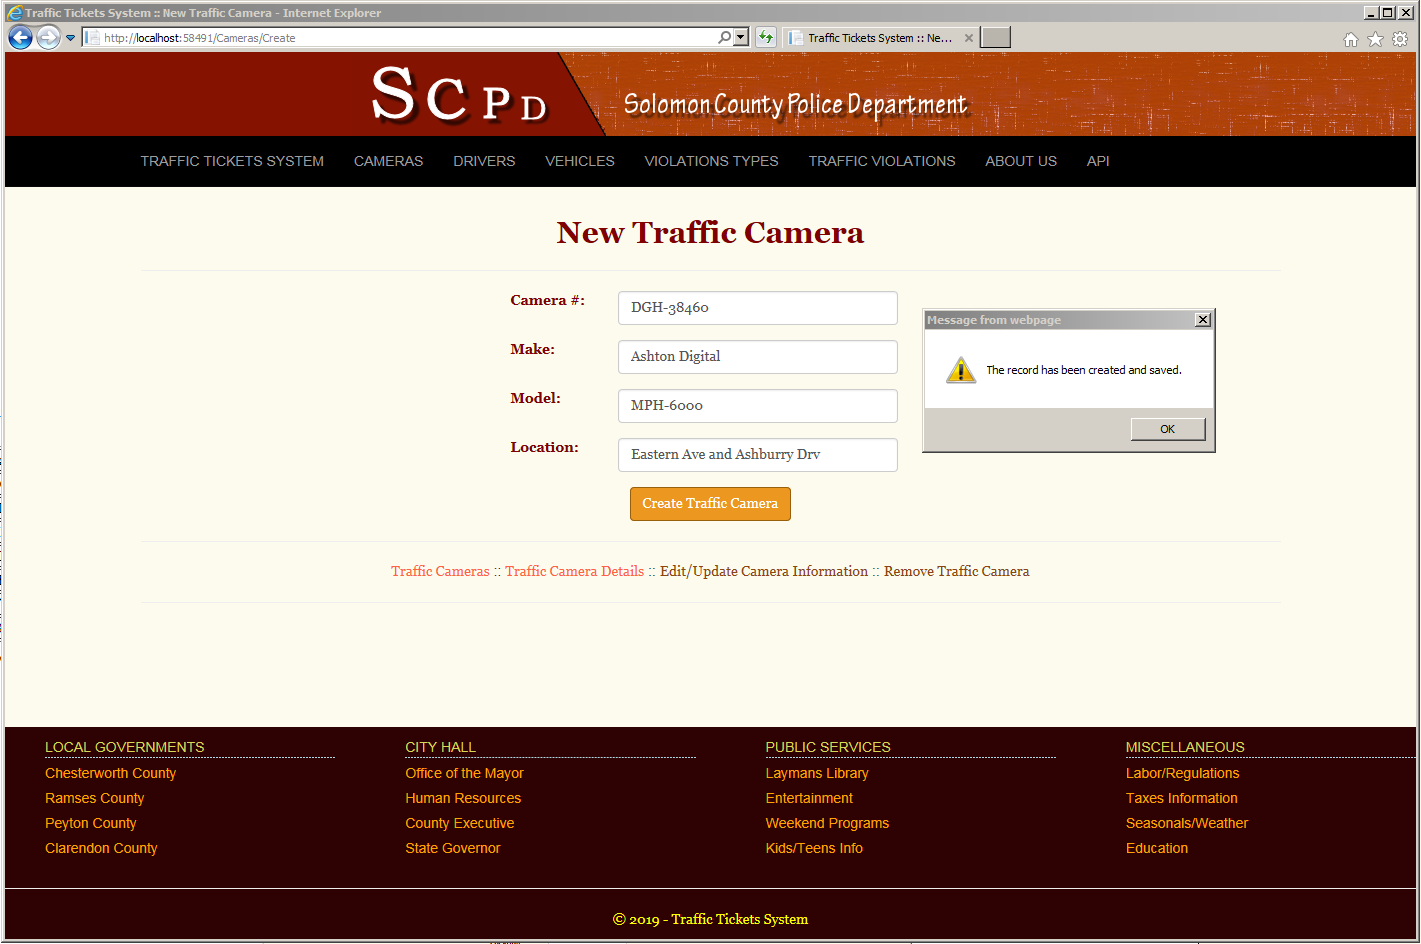 Traffic Tickets System - Traffic Camera Setup